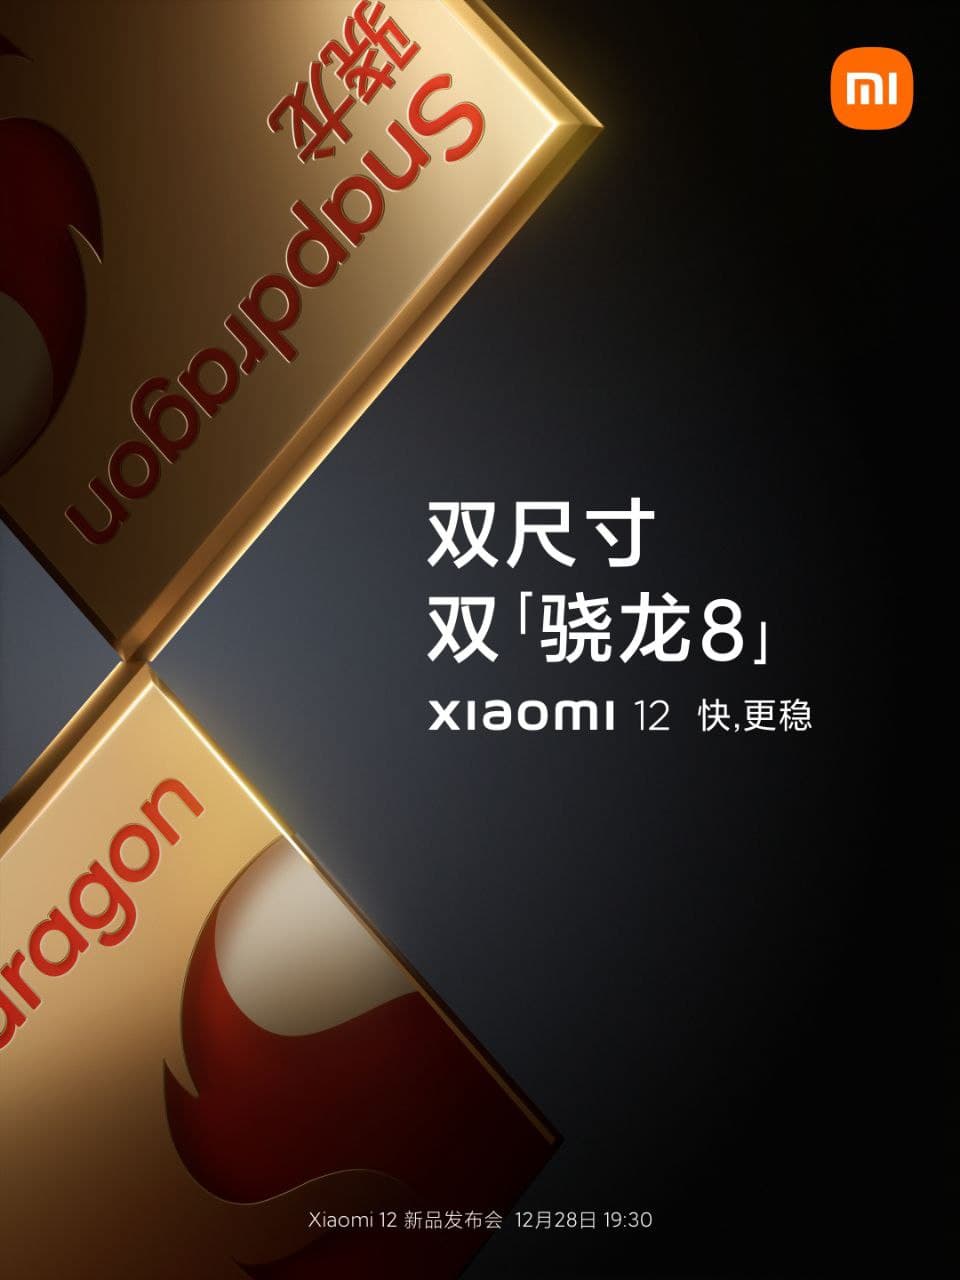 xiaomi 12 processor